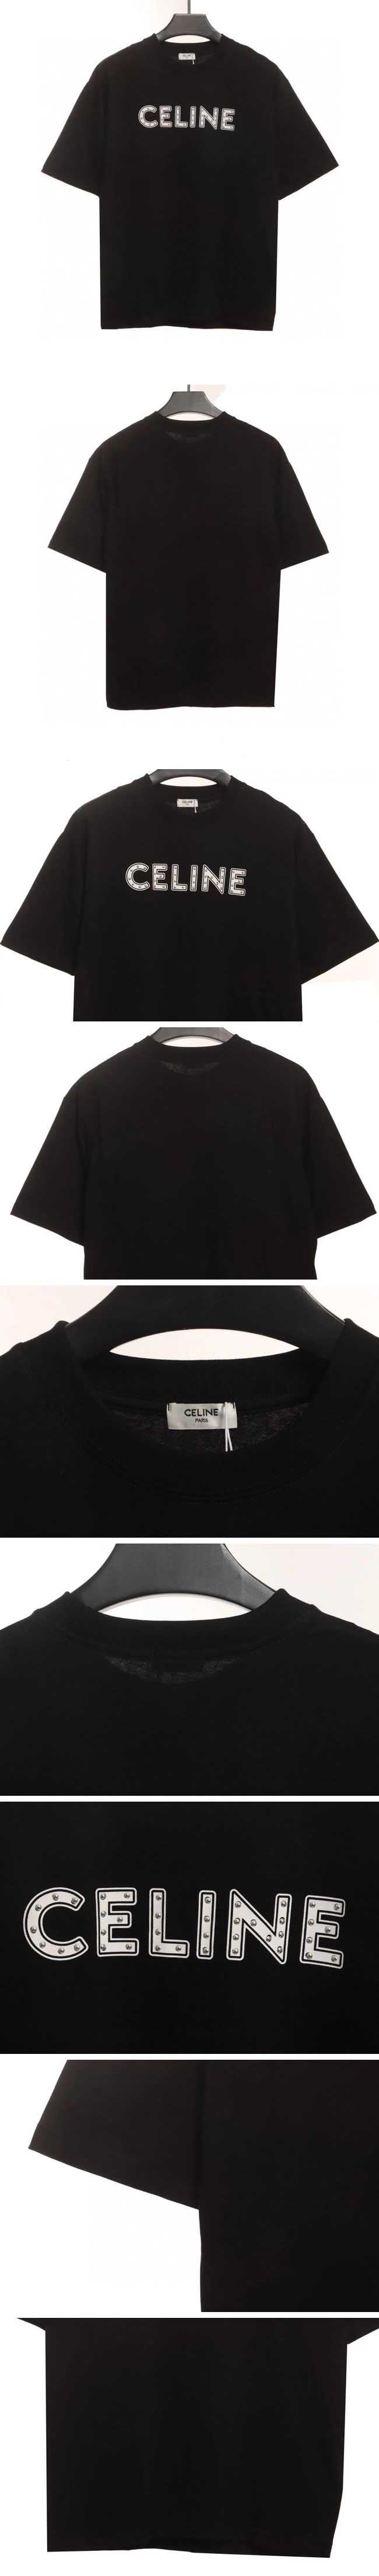 Celine Studded Logo Tee Black セリーヌ スタッズロゴ Tシャツ ブラック